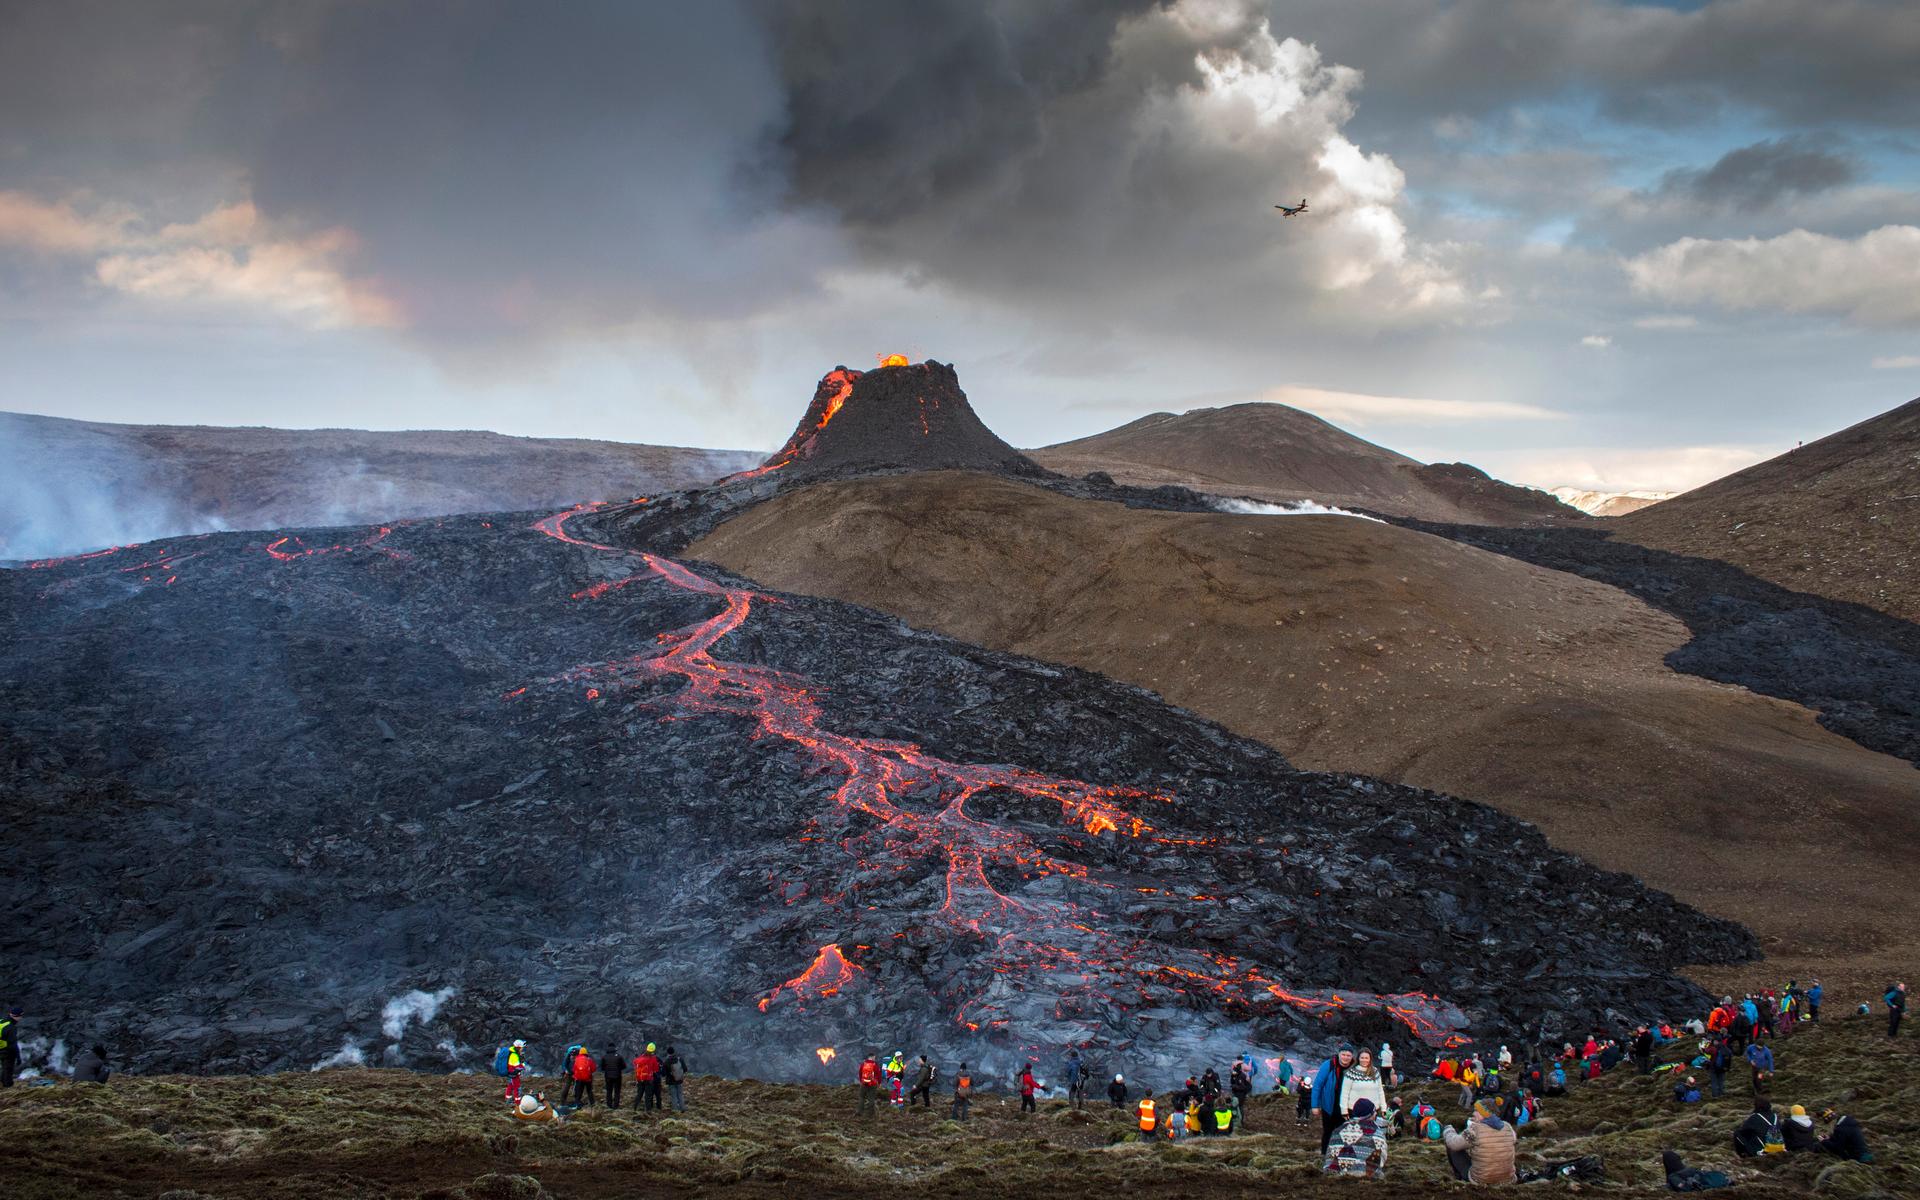 I mitten av mars 2021 fick en vulkan i närheten av Reykjavik ett utbrott.